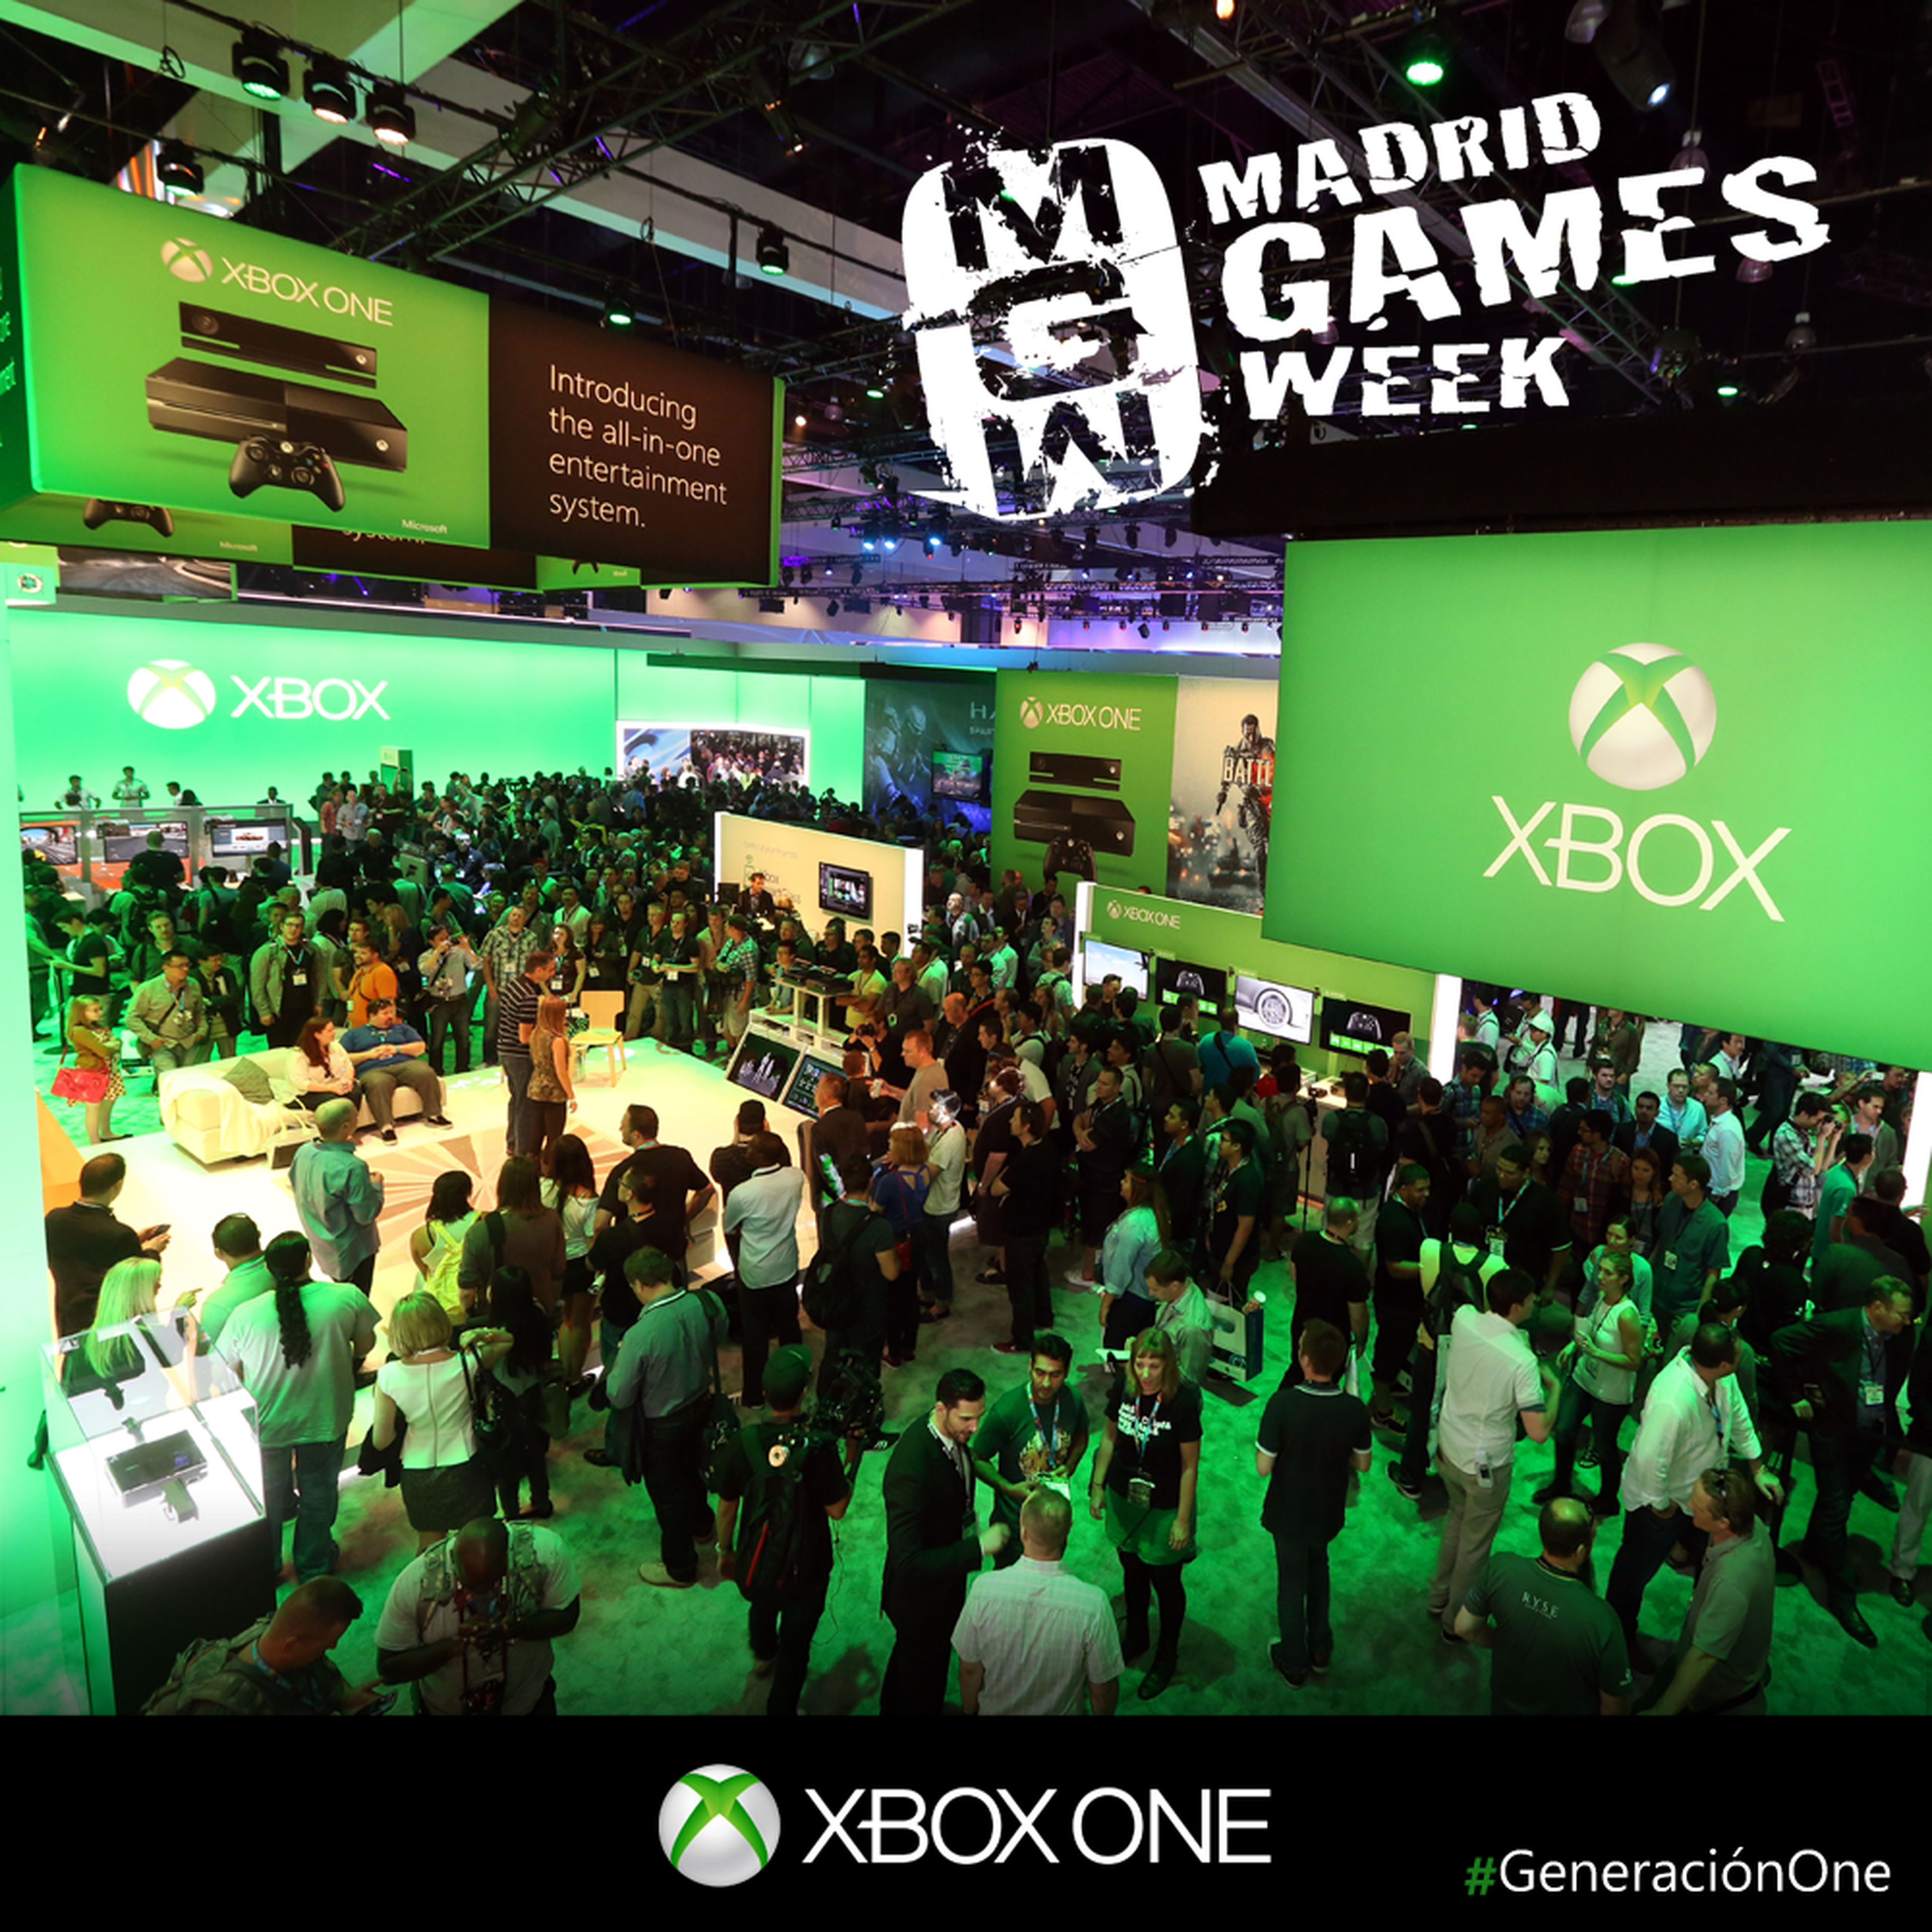 Concurso Xbox One en Madrid Games Week